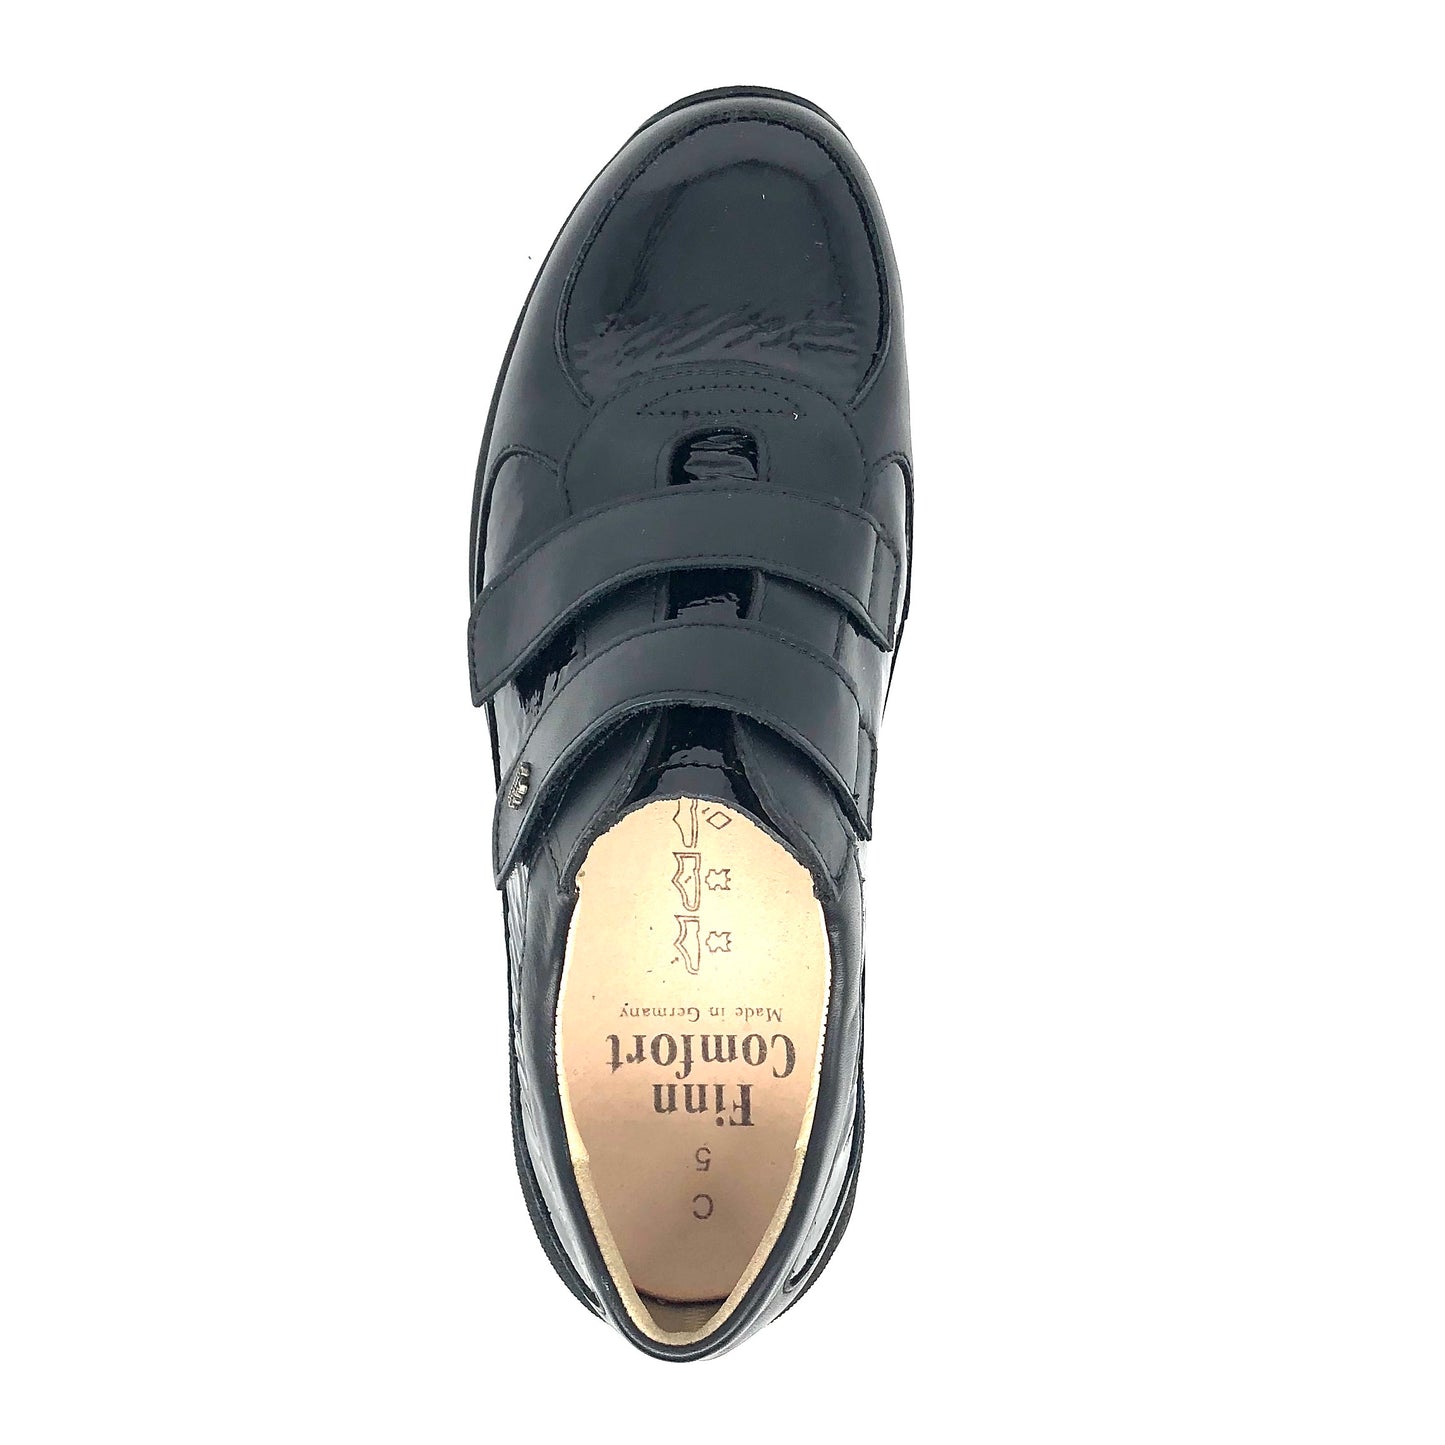 Damen Klett Sneakers schwarz Finn Comfort 17100